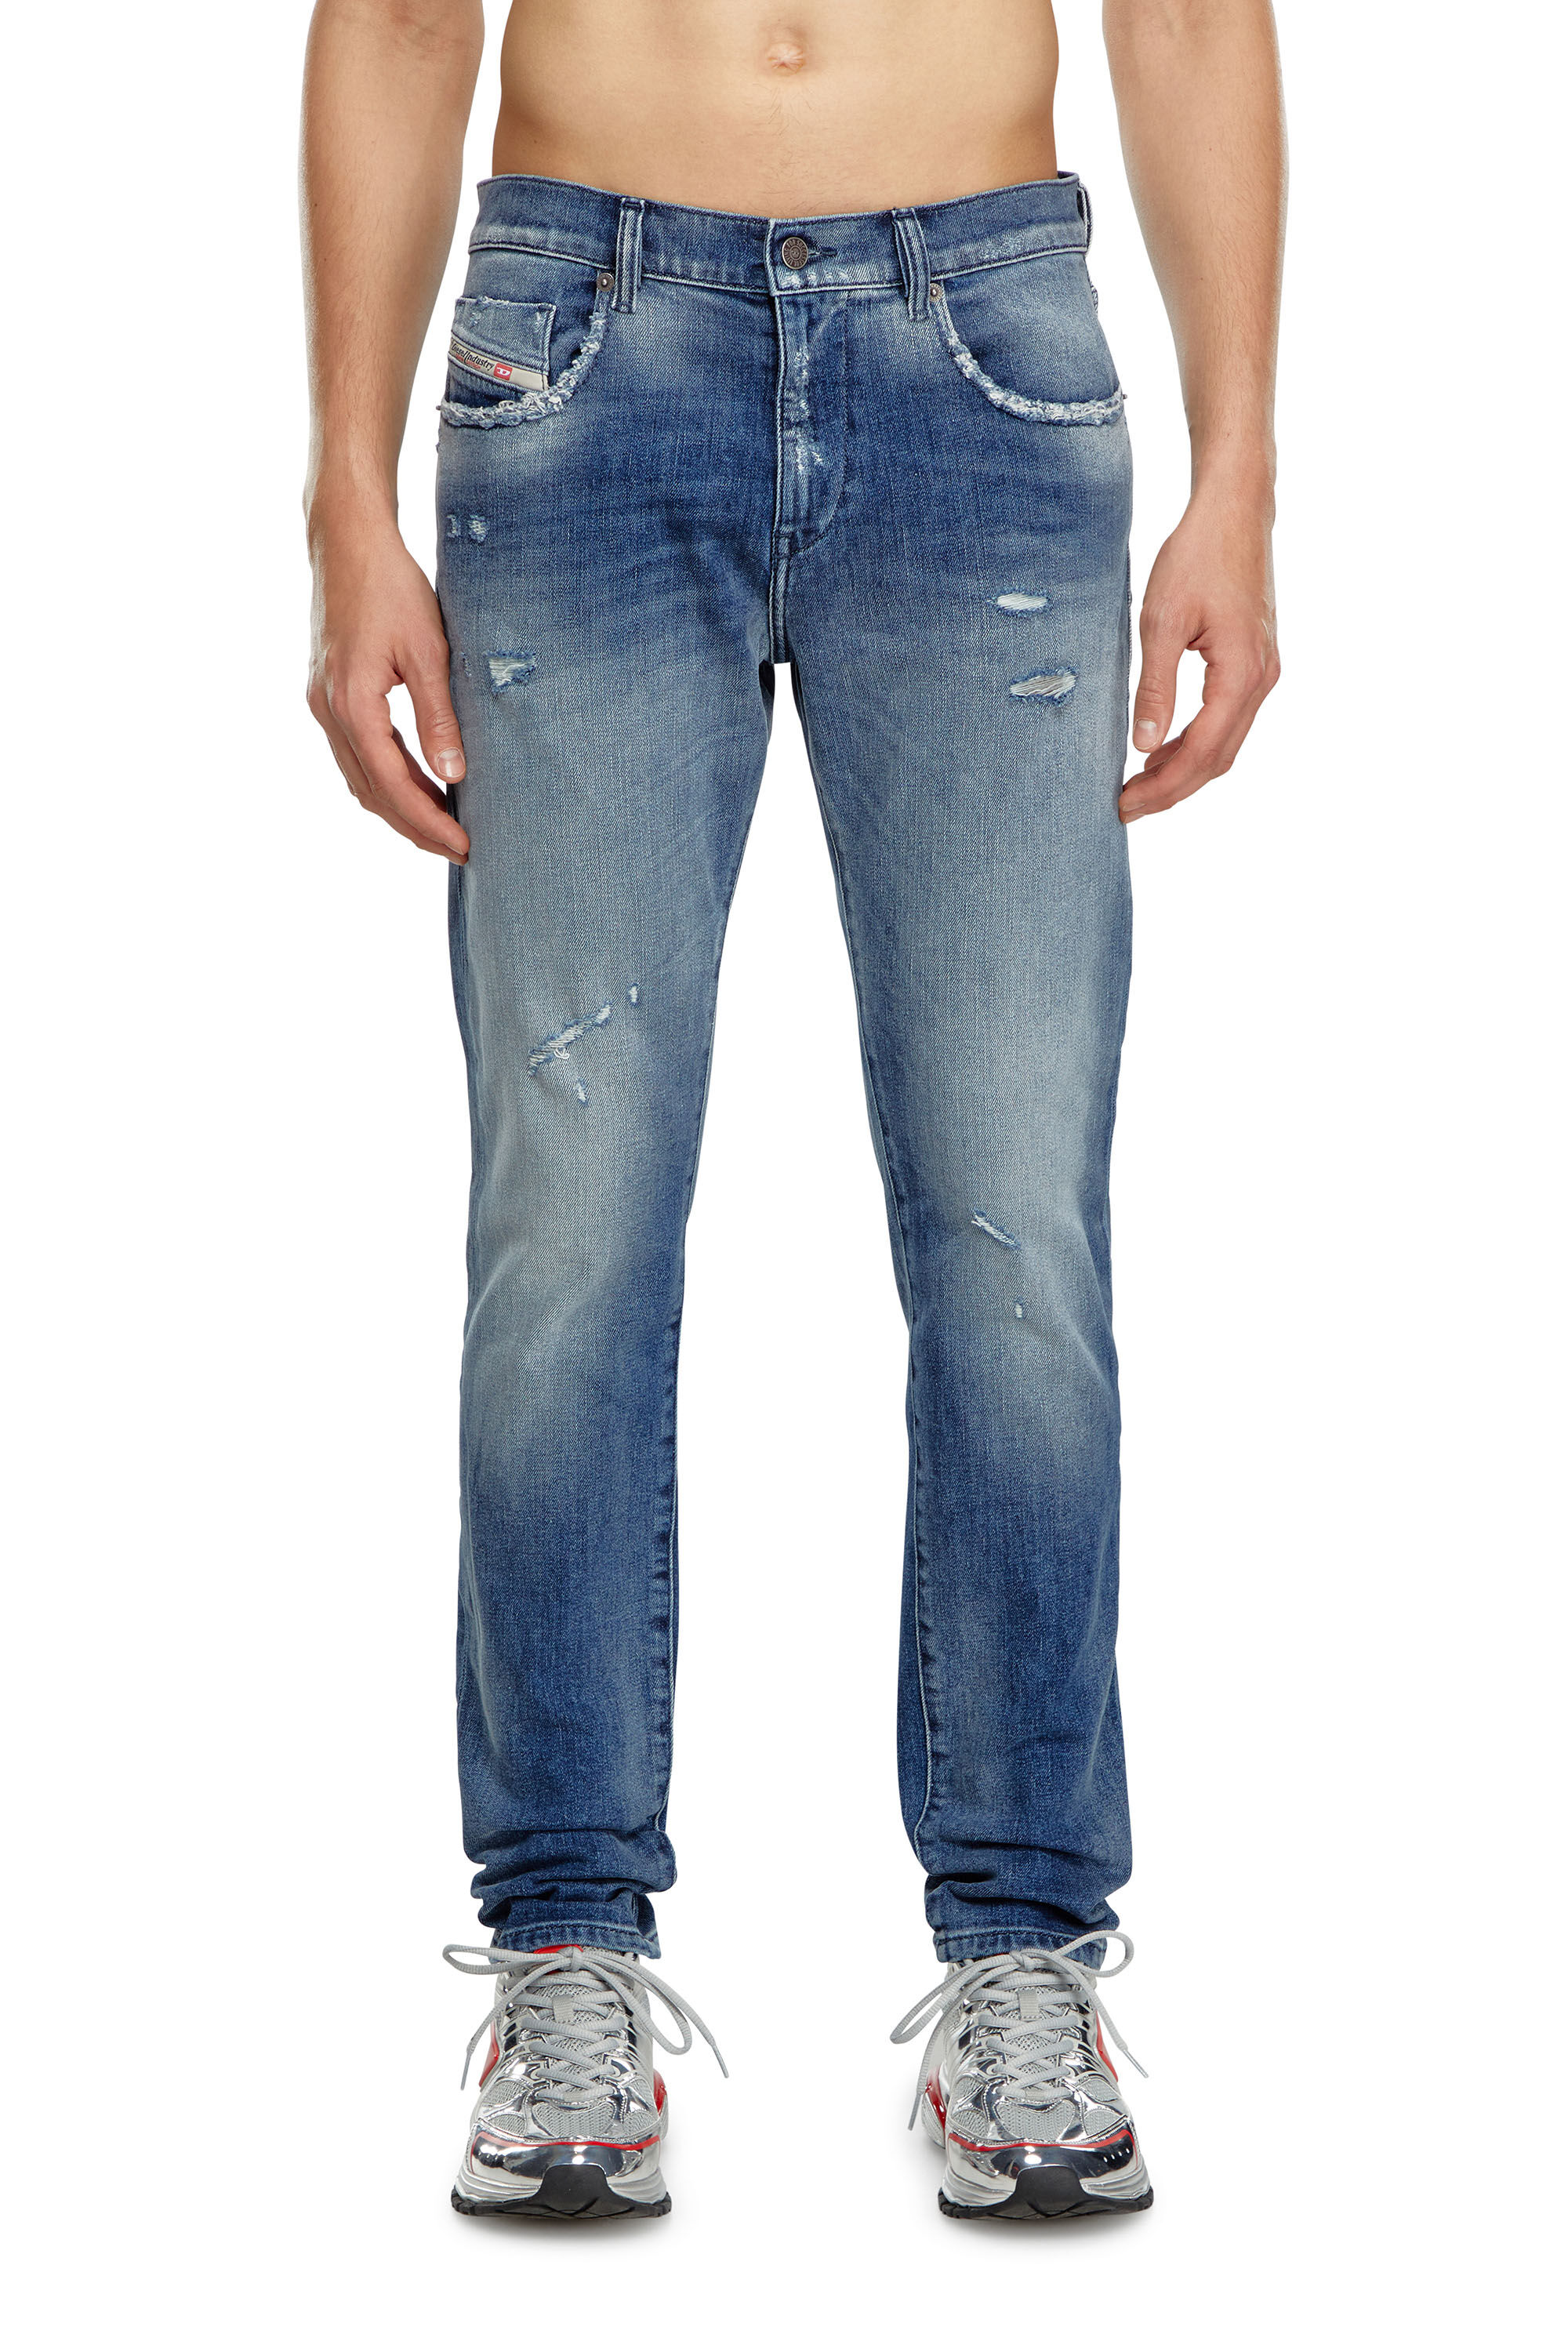 Diesel - Slim Jeans 2019 D-Strukt 09J61, Hombre Slim Jeans - 2019 D-Strukt in Azul marino - Image 3